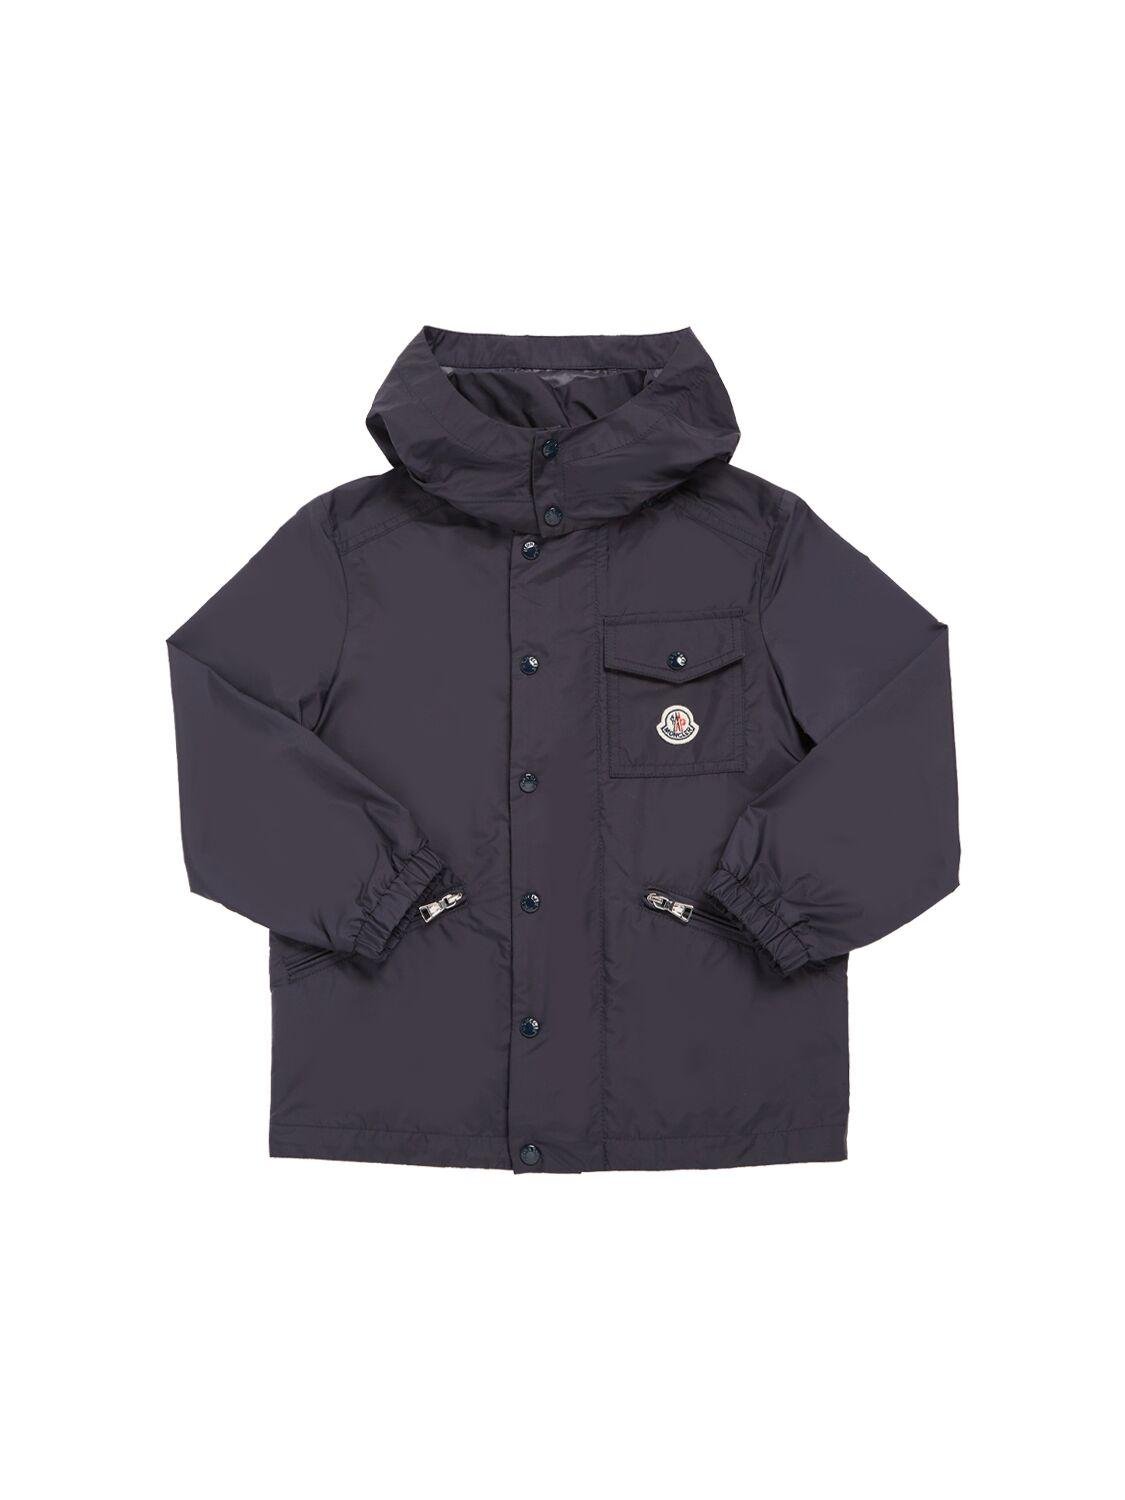 Lusala Nylon Rainwear Jacket by MONCLER